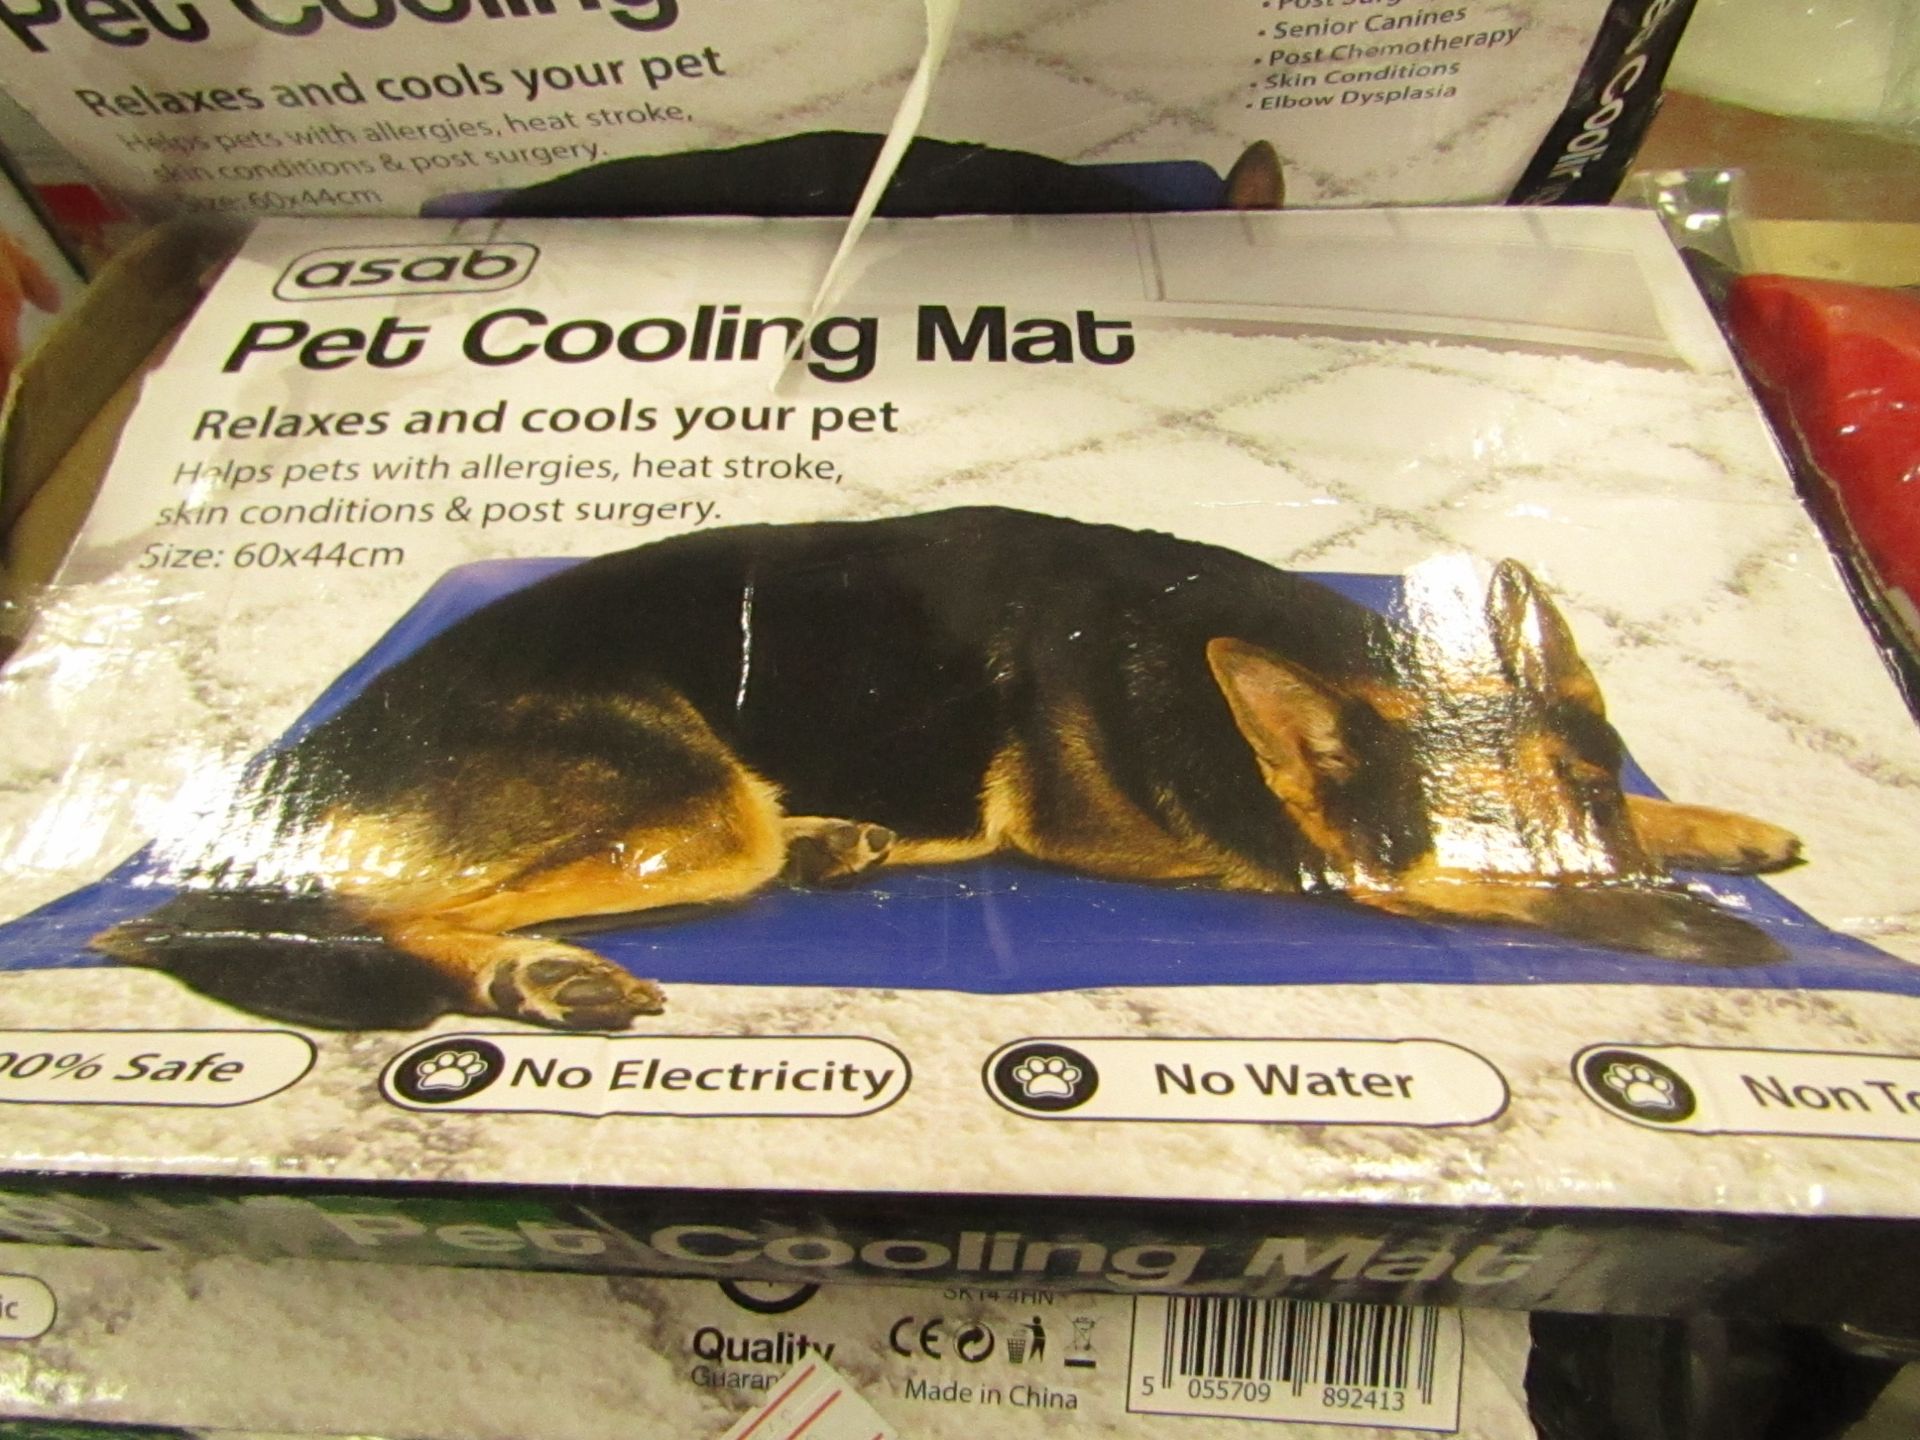 2 x Asab Pet Cooling Mtas. Unused & packaged